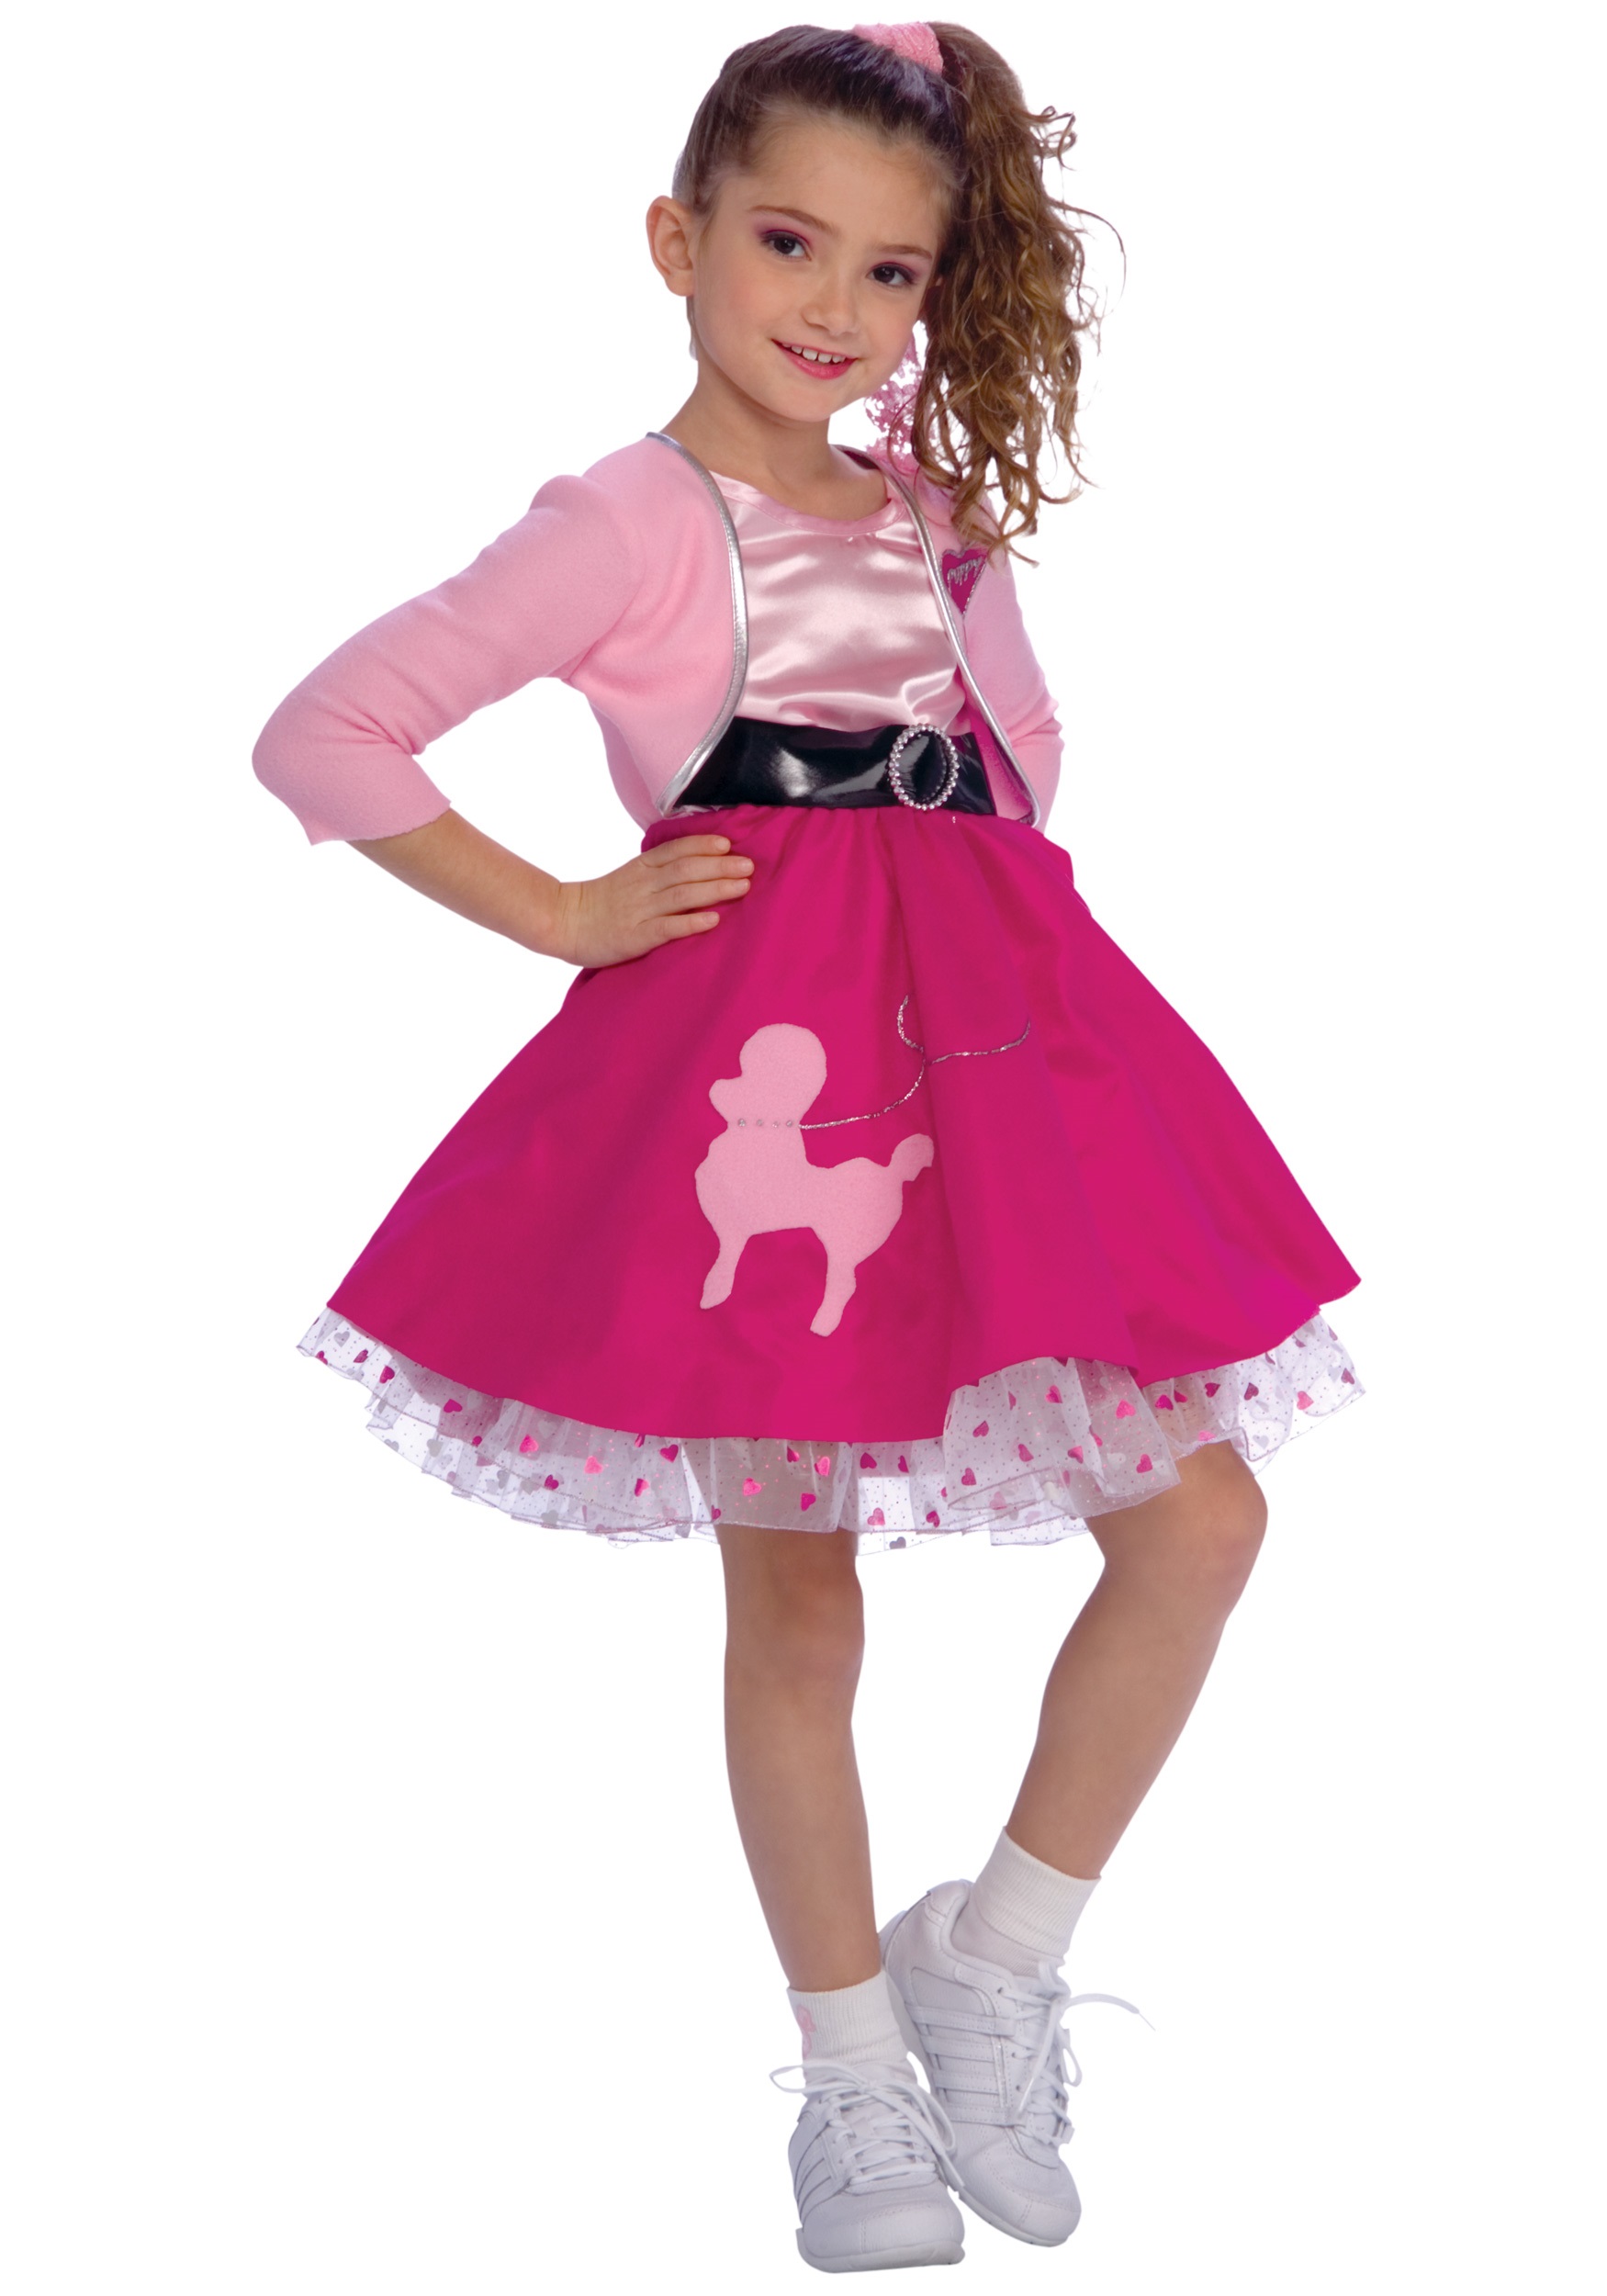 Photos - Fancy Dress Rubies Costume Co. Inc Pink Poodle Skirt Girls Costume Pink RU883050